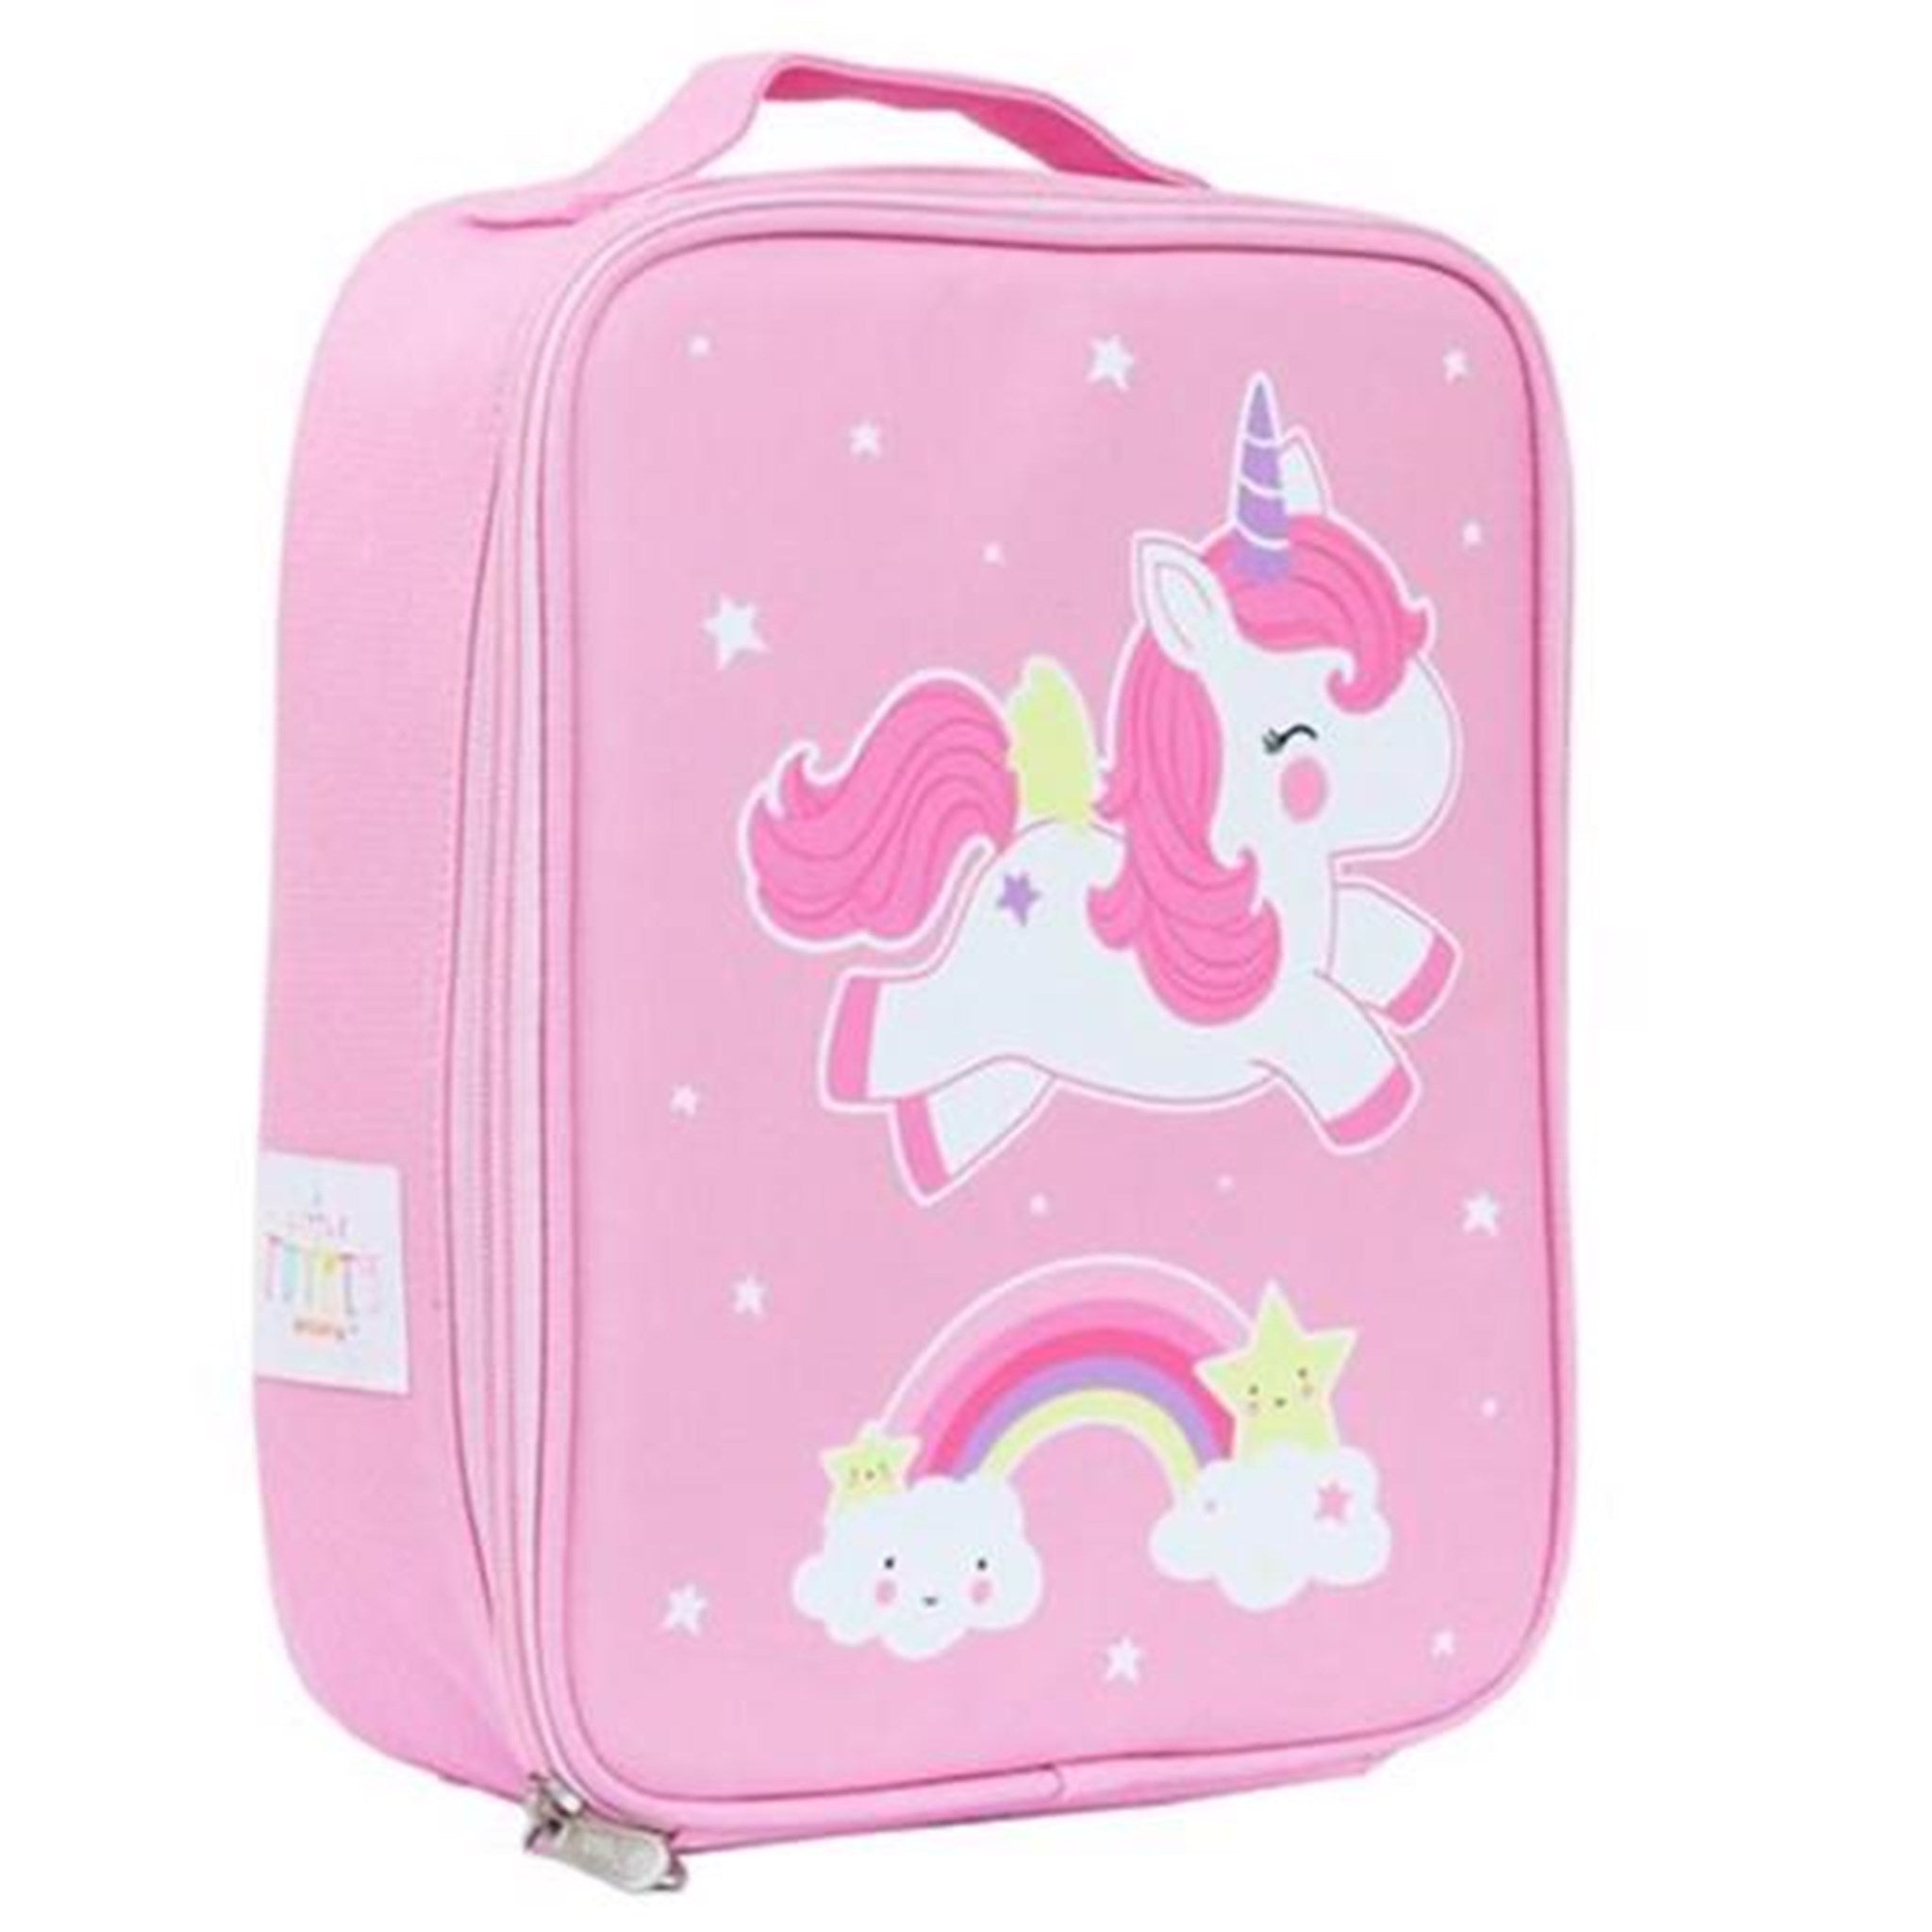 A Little Lovely Company Cool Bag Unicorn 6